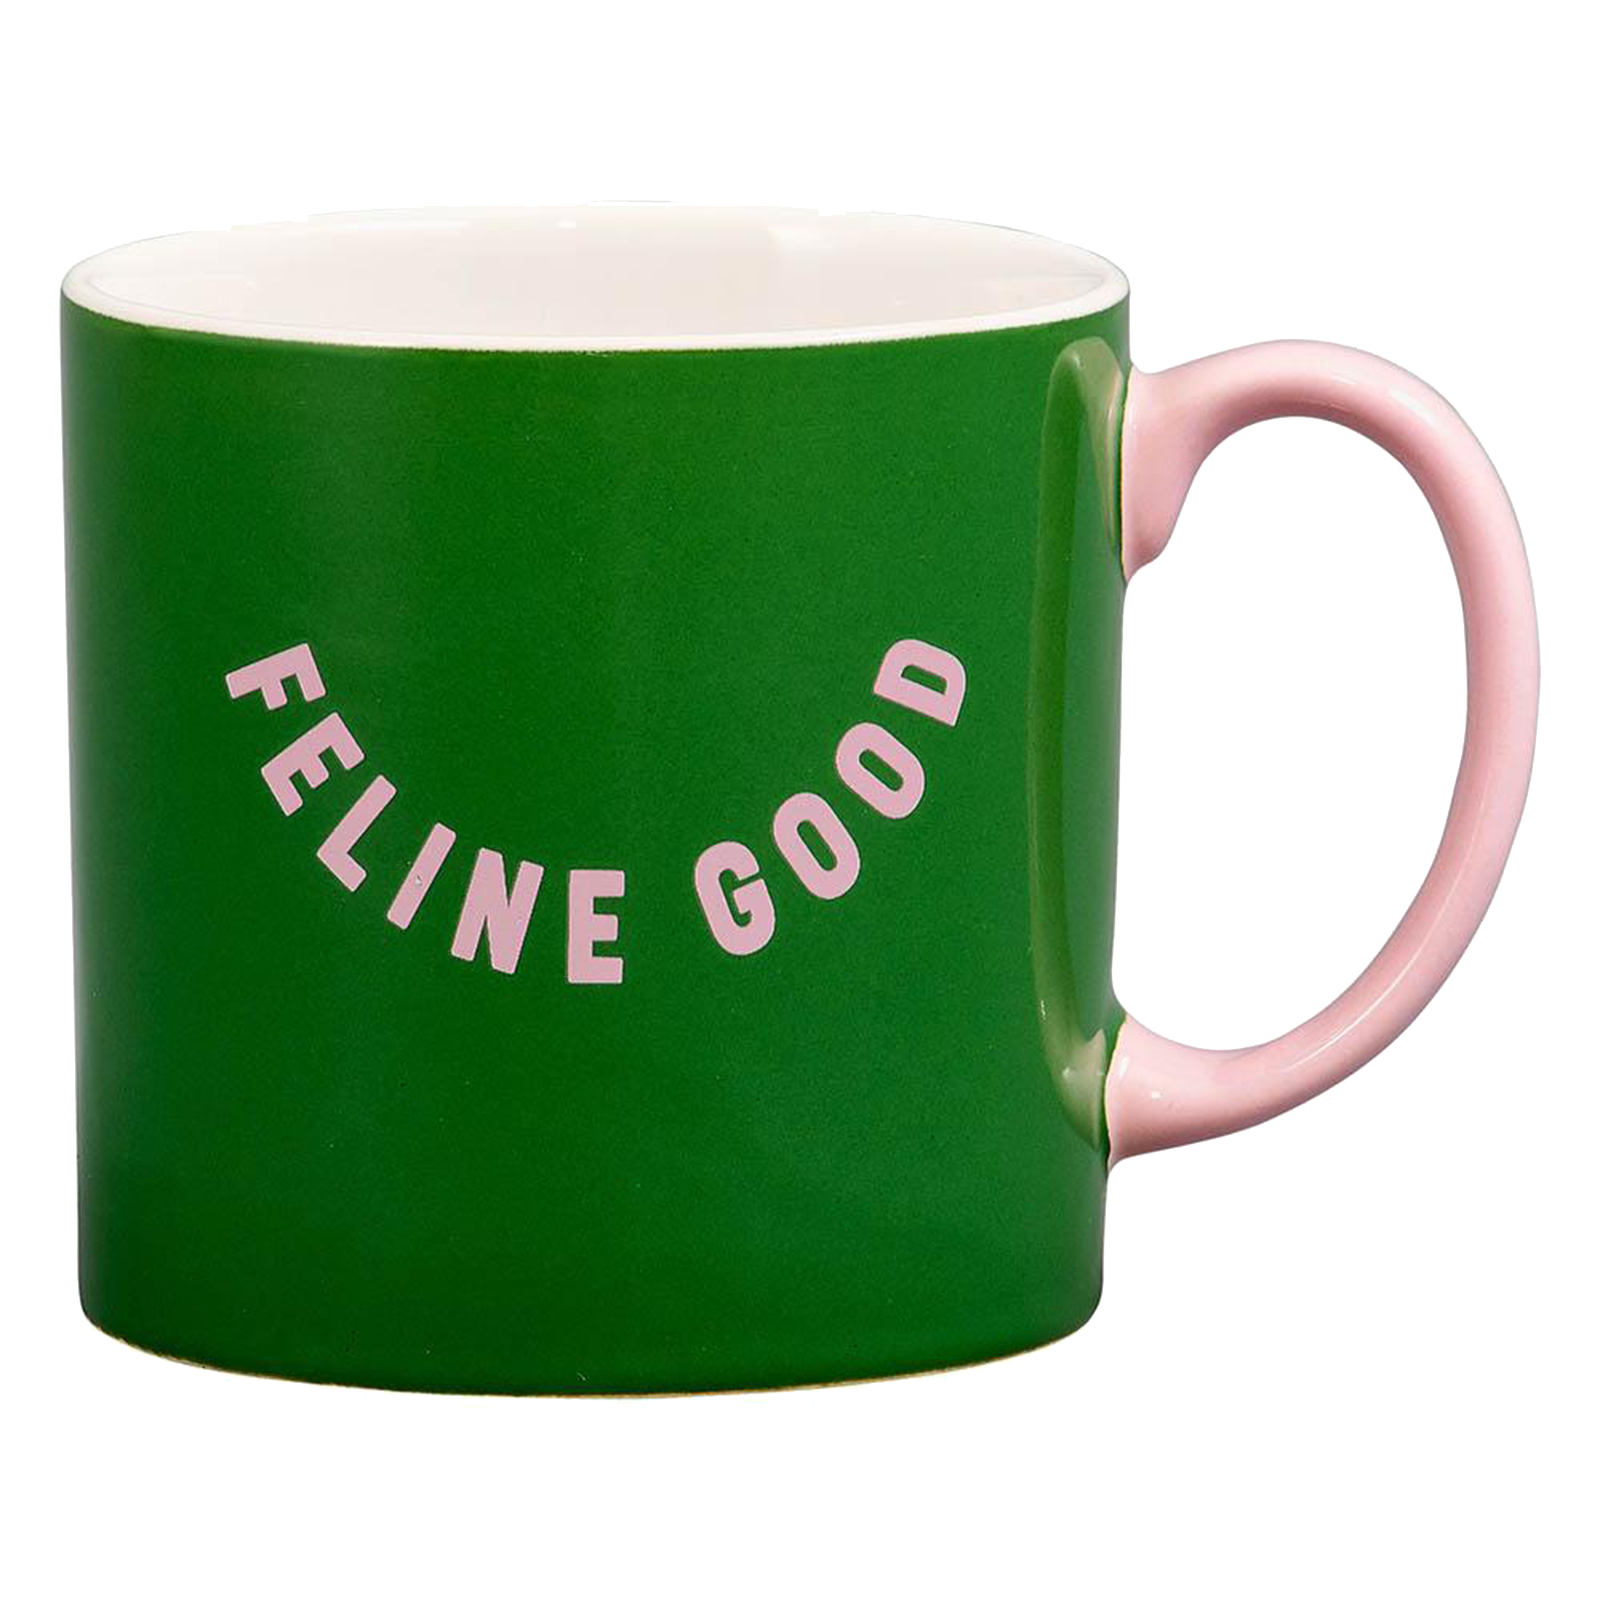 "Feline Good" Mug